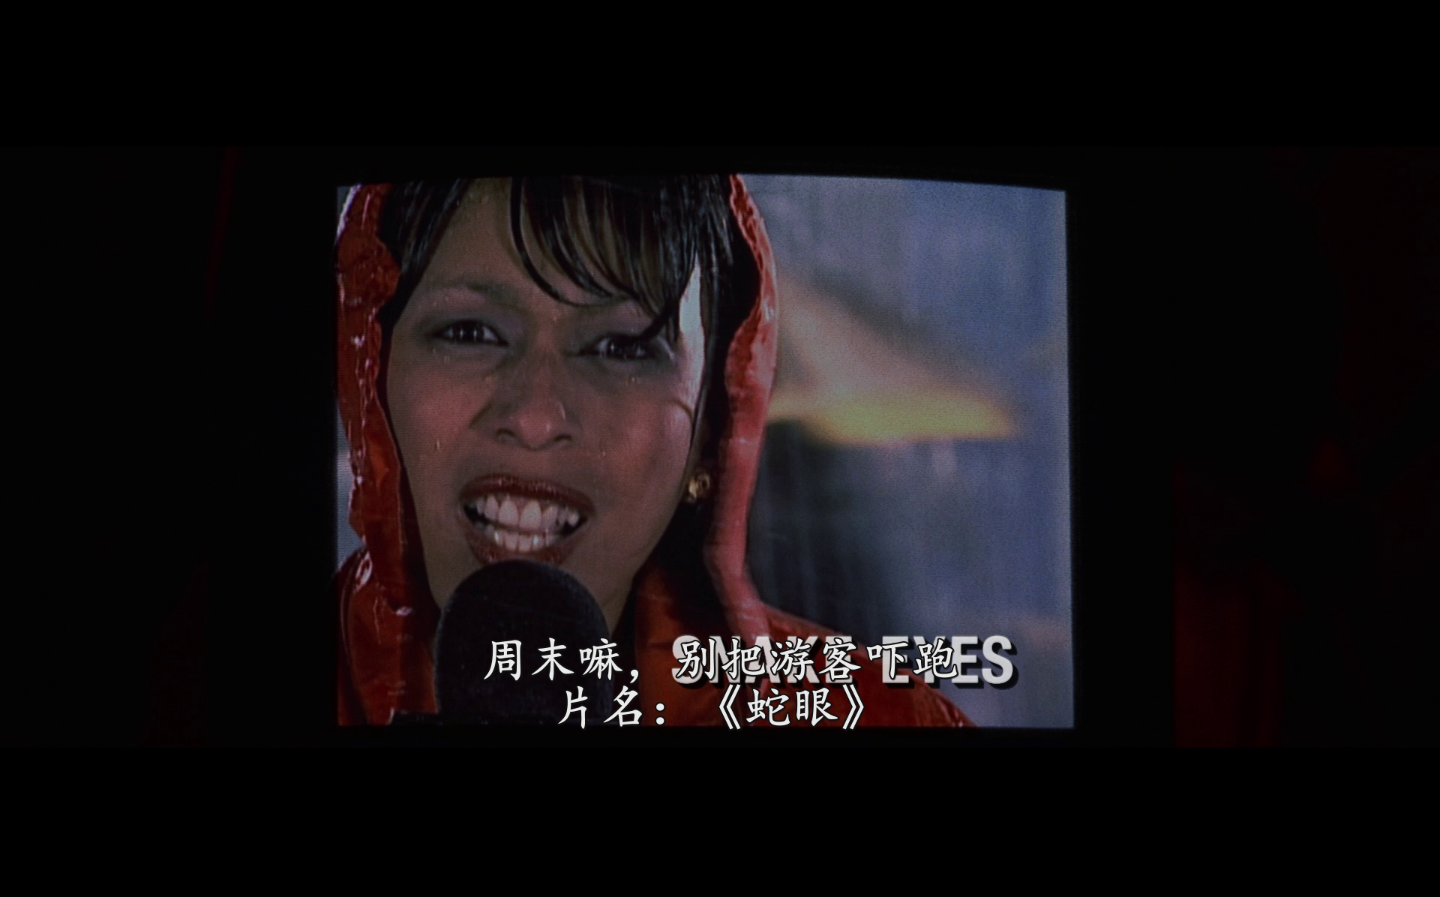 [蛇眼].Snake.Eyes.1998.BluRay.1080p.AVC.DTS-HD.MA.5.1-碟痴痴@BDarea   23.3G-3.png